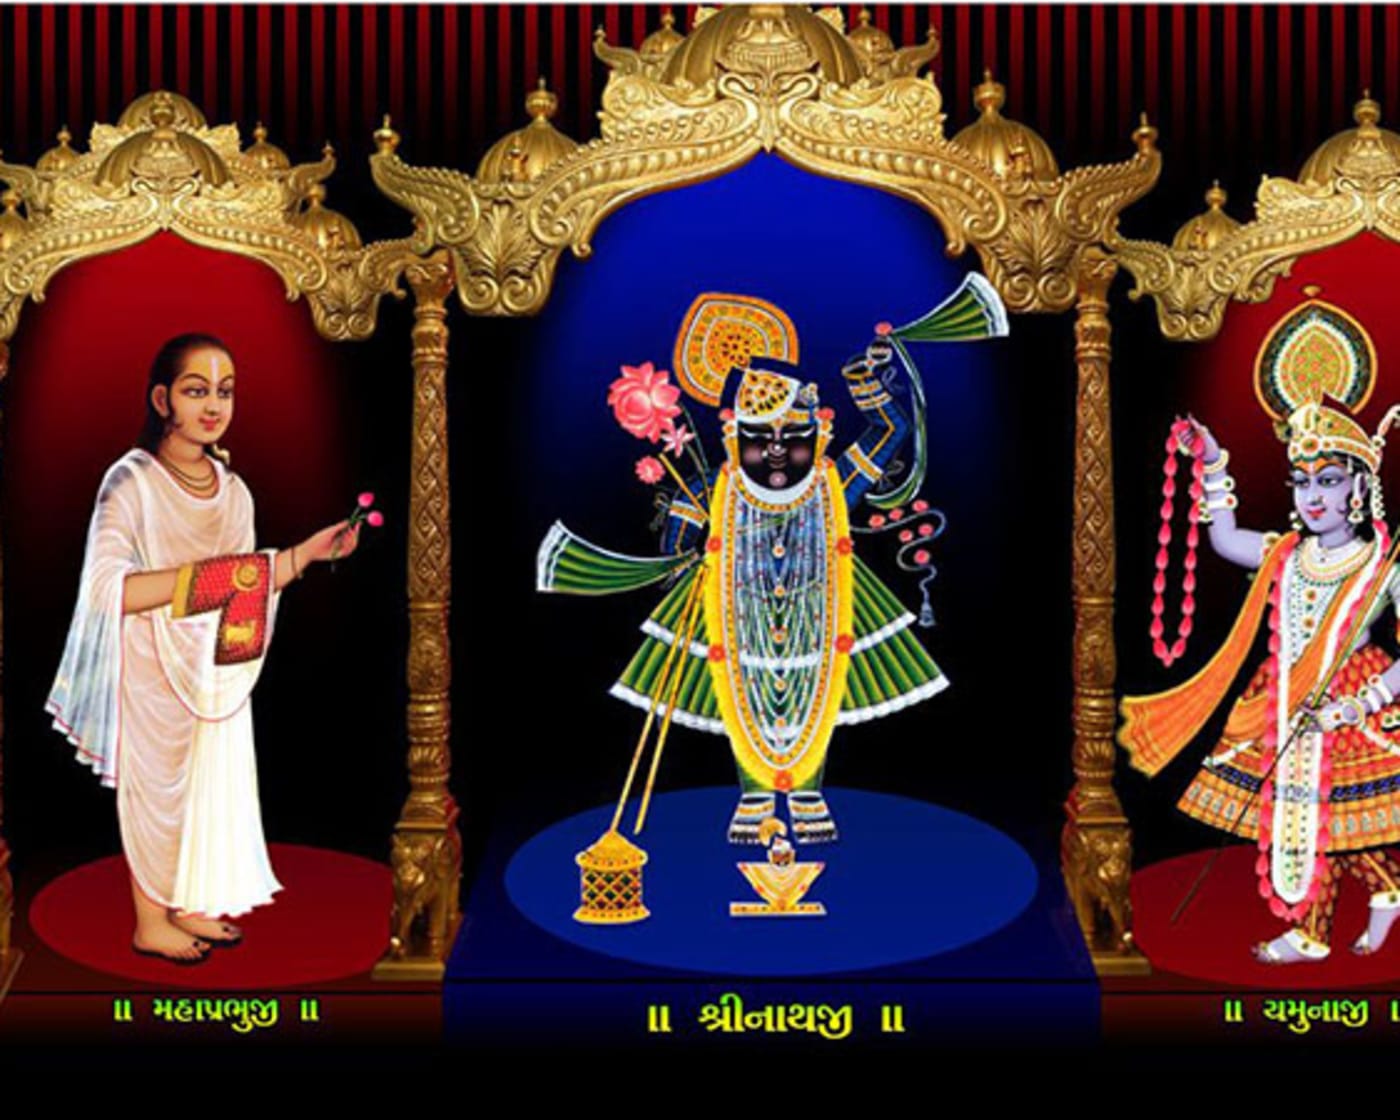 Nathdwara Shrinath Ji Darshans - Guide and Types - Artlivo